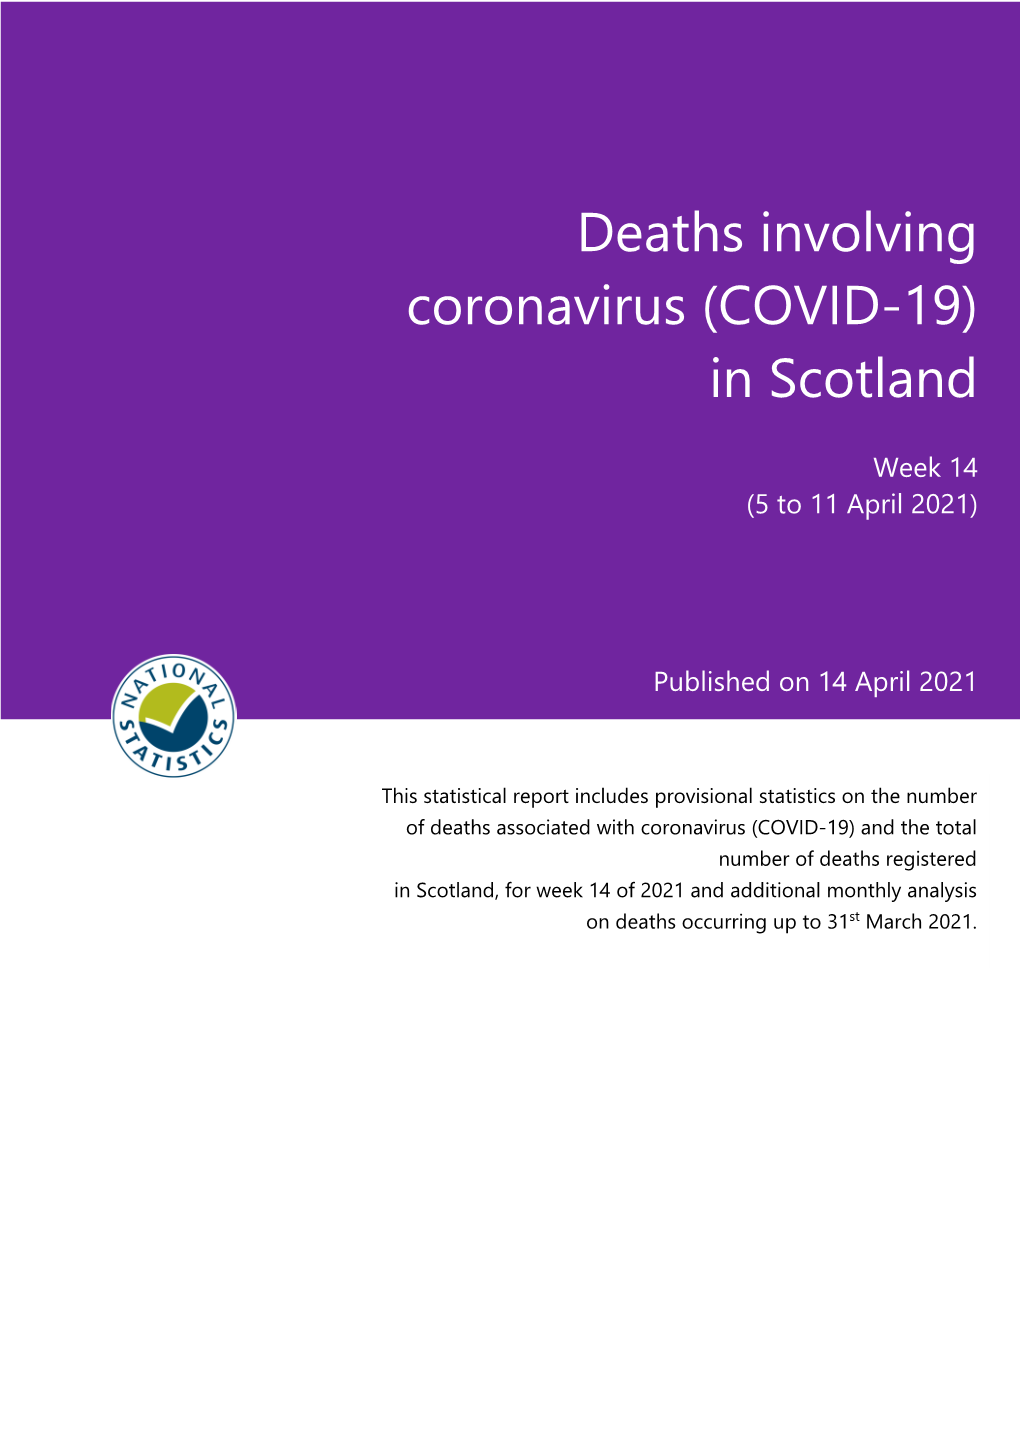 Deaths Involving Coronavirus (COVID-19) in Scotland, Week 14: Report